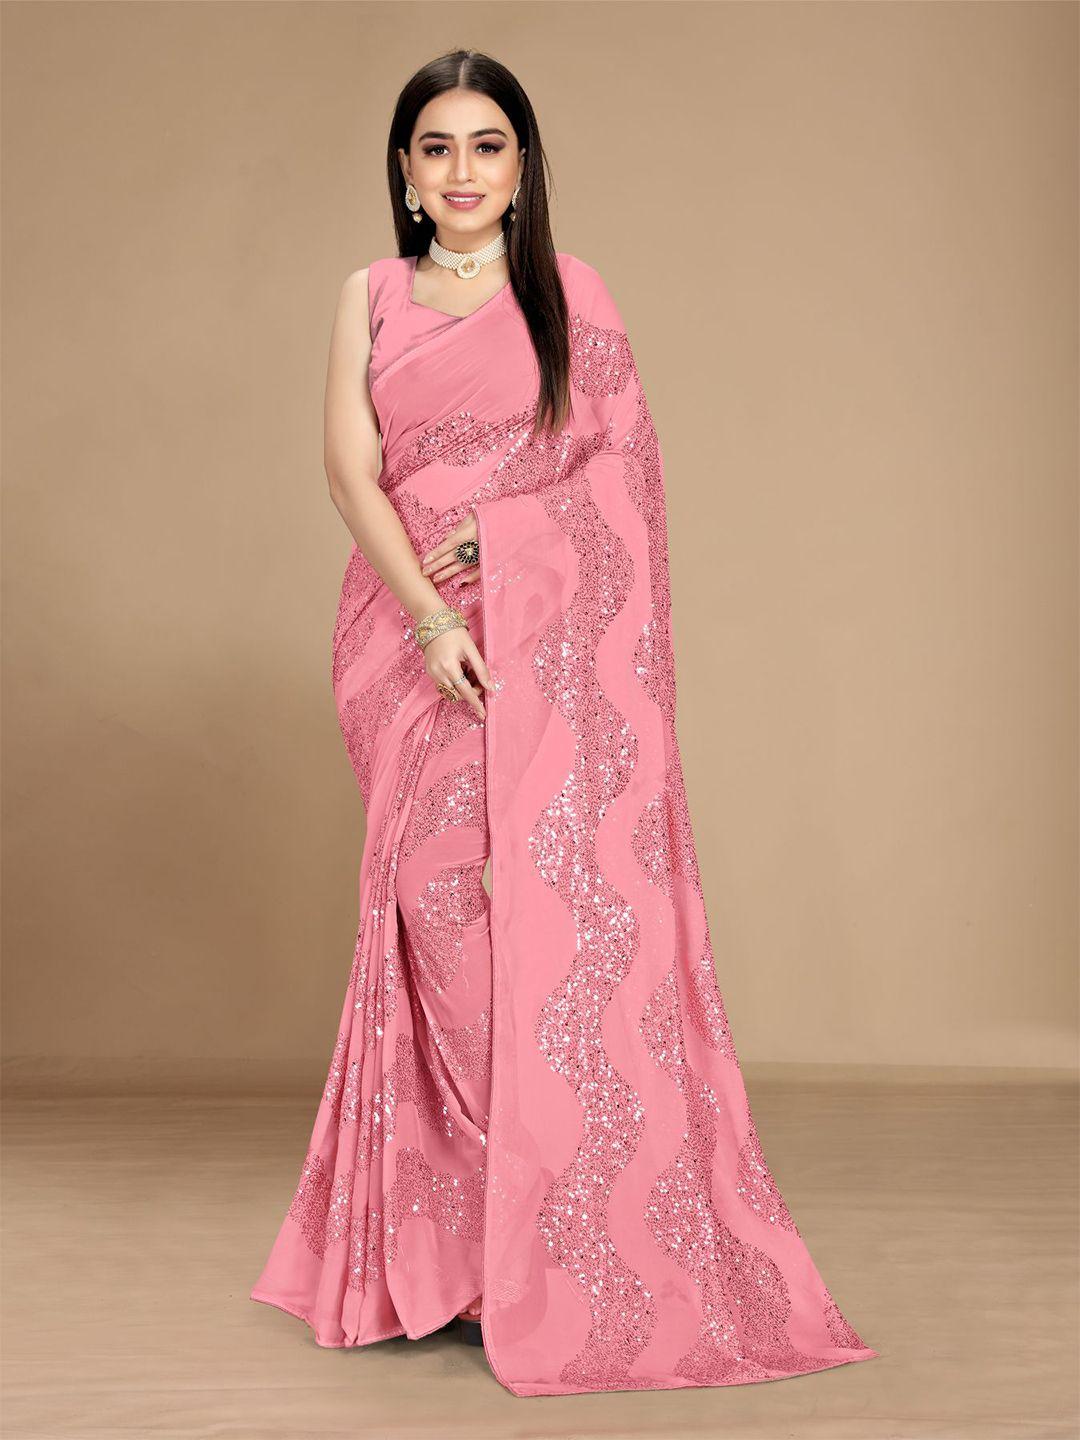 vairagee peach-coloured embellished saree